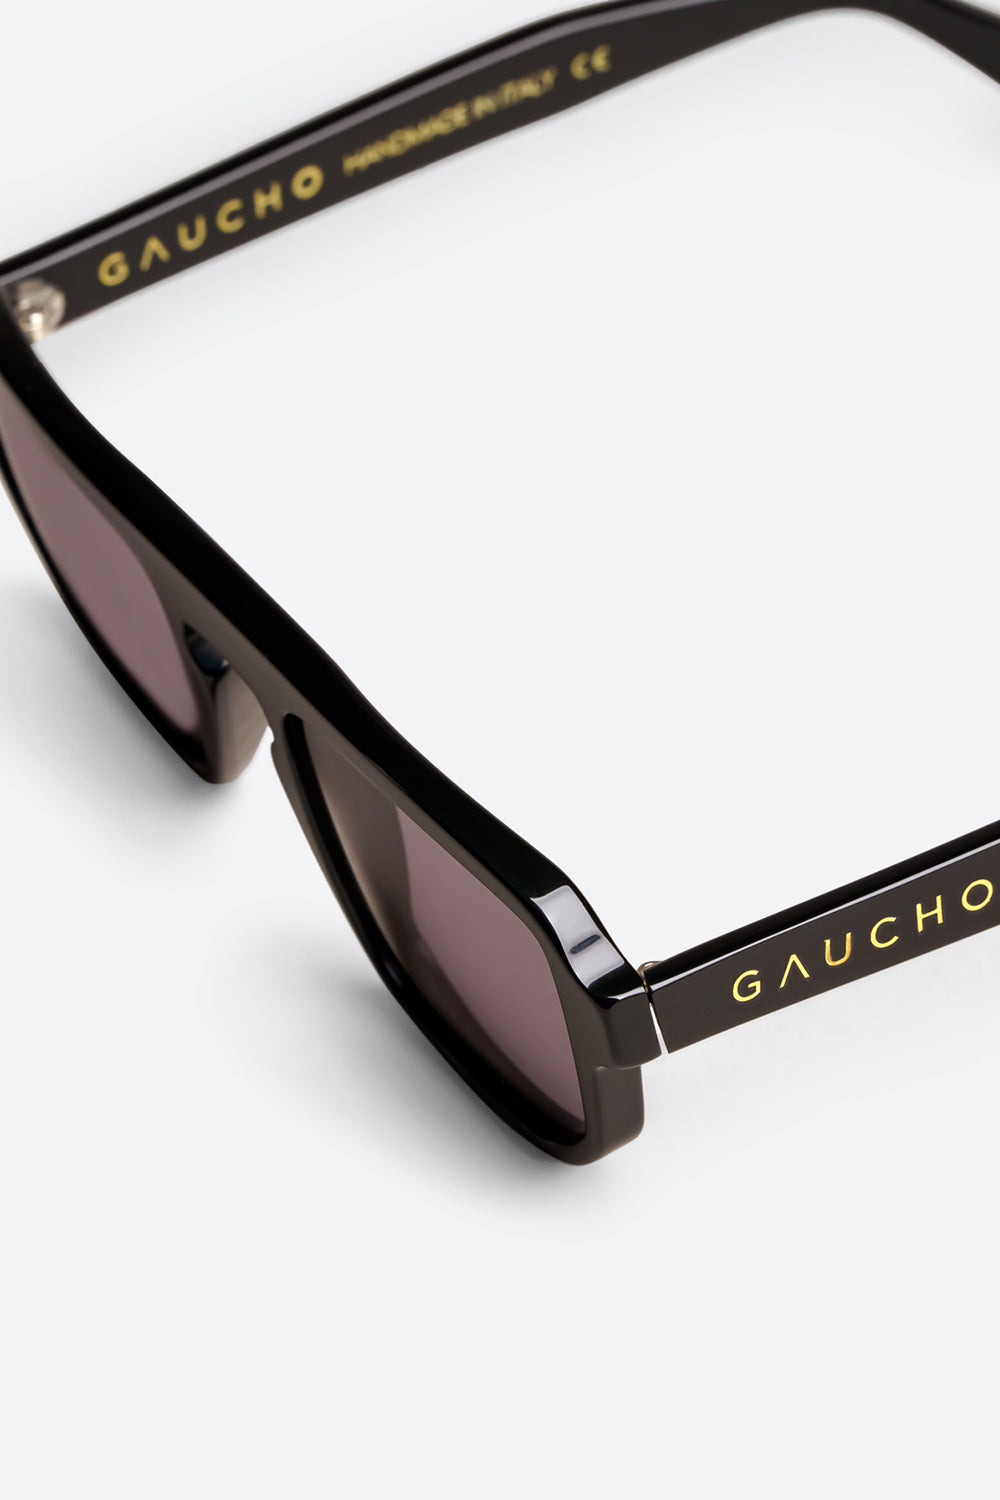 Black Gaucho Sunglasses